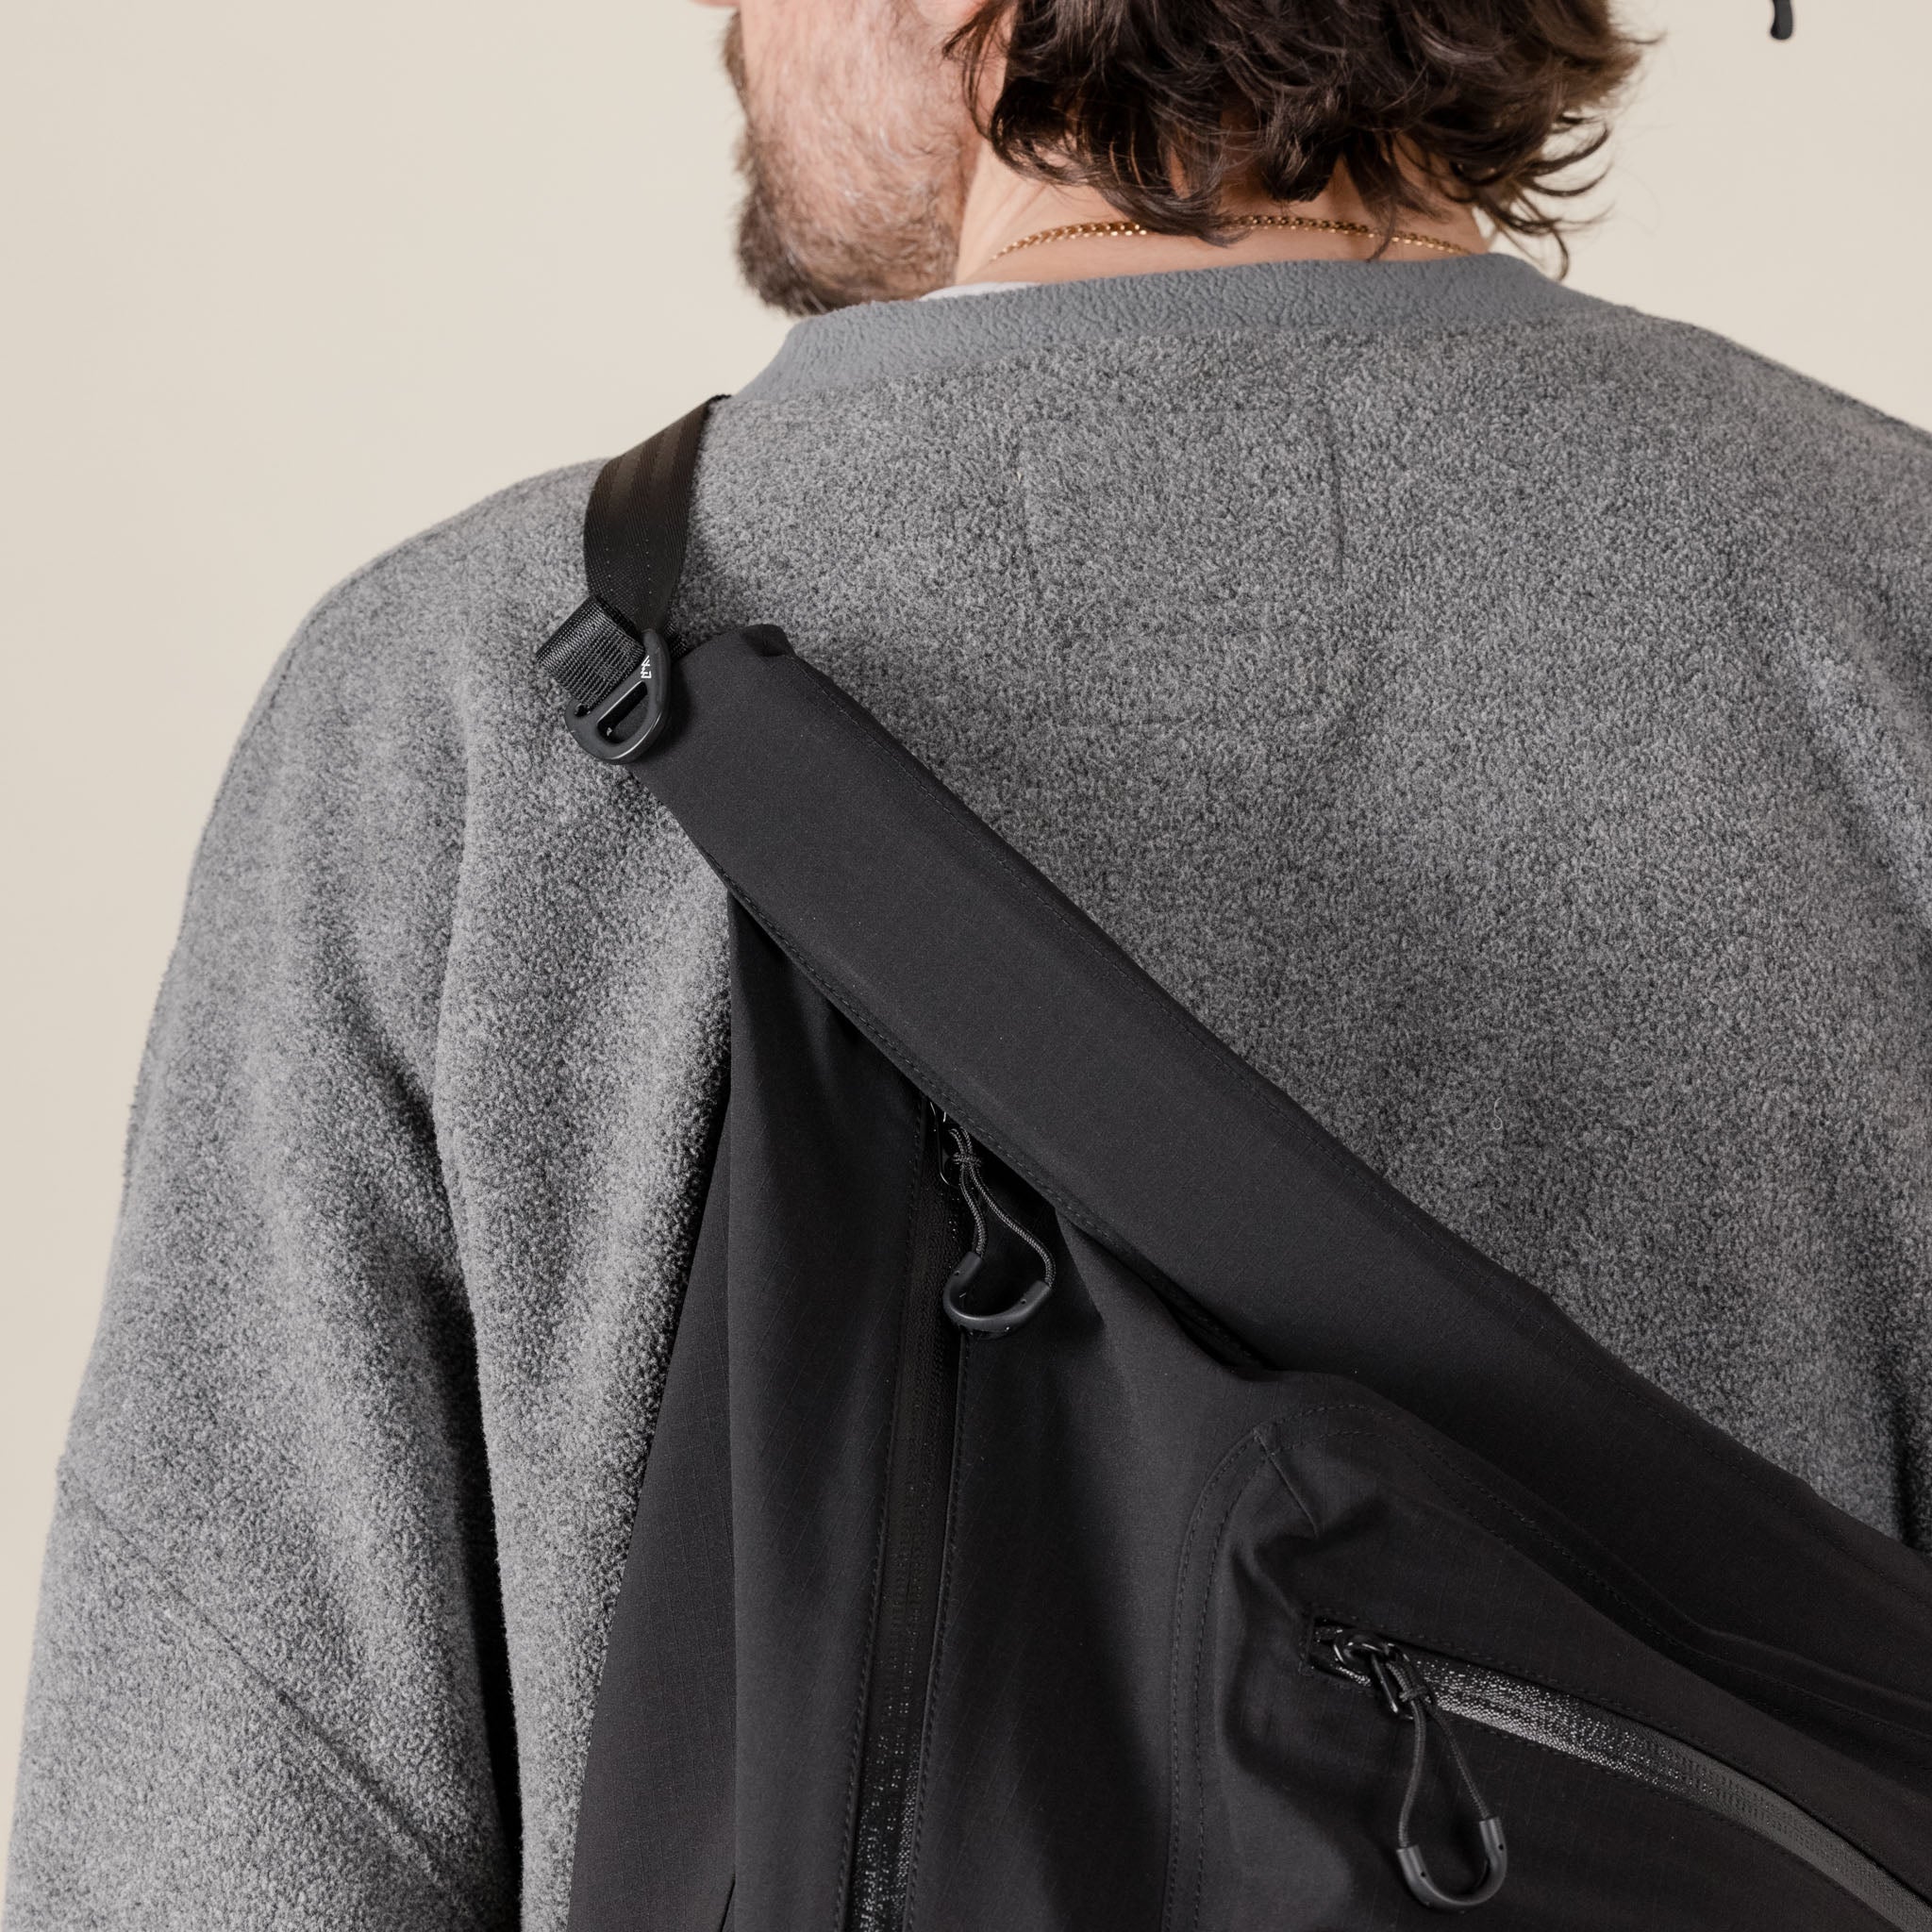 CMF Comfy Outdoor Garment - TTOO Exclusive - CMF Waterproof Roll Top Bag - Black